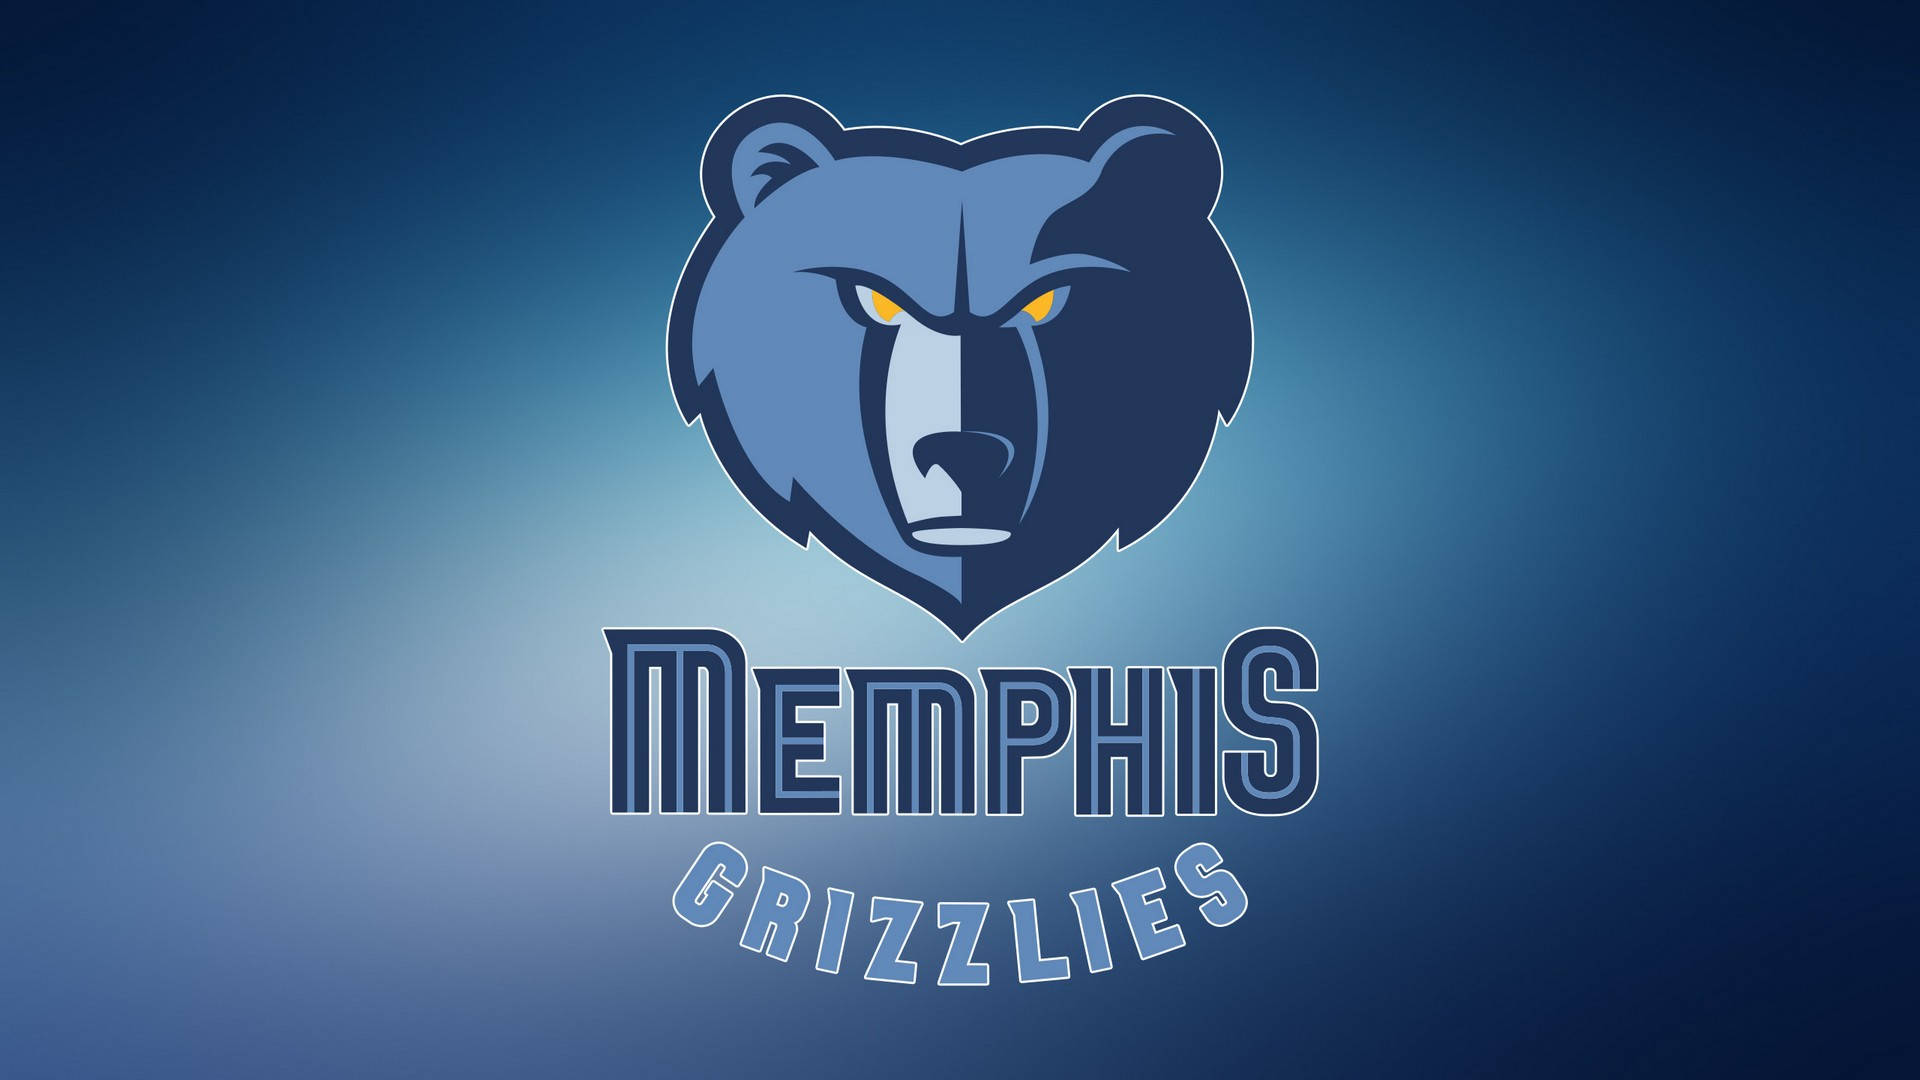 Free Memphis Grizzlies Wallpaper Downloads, Memphis Grizzlies Wallpaper for FREE